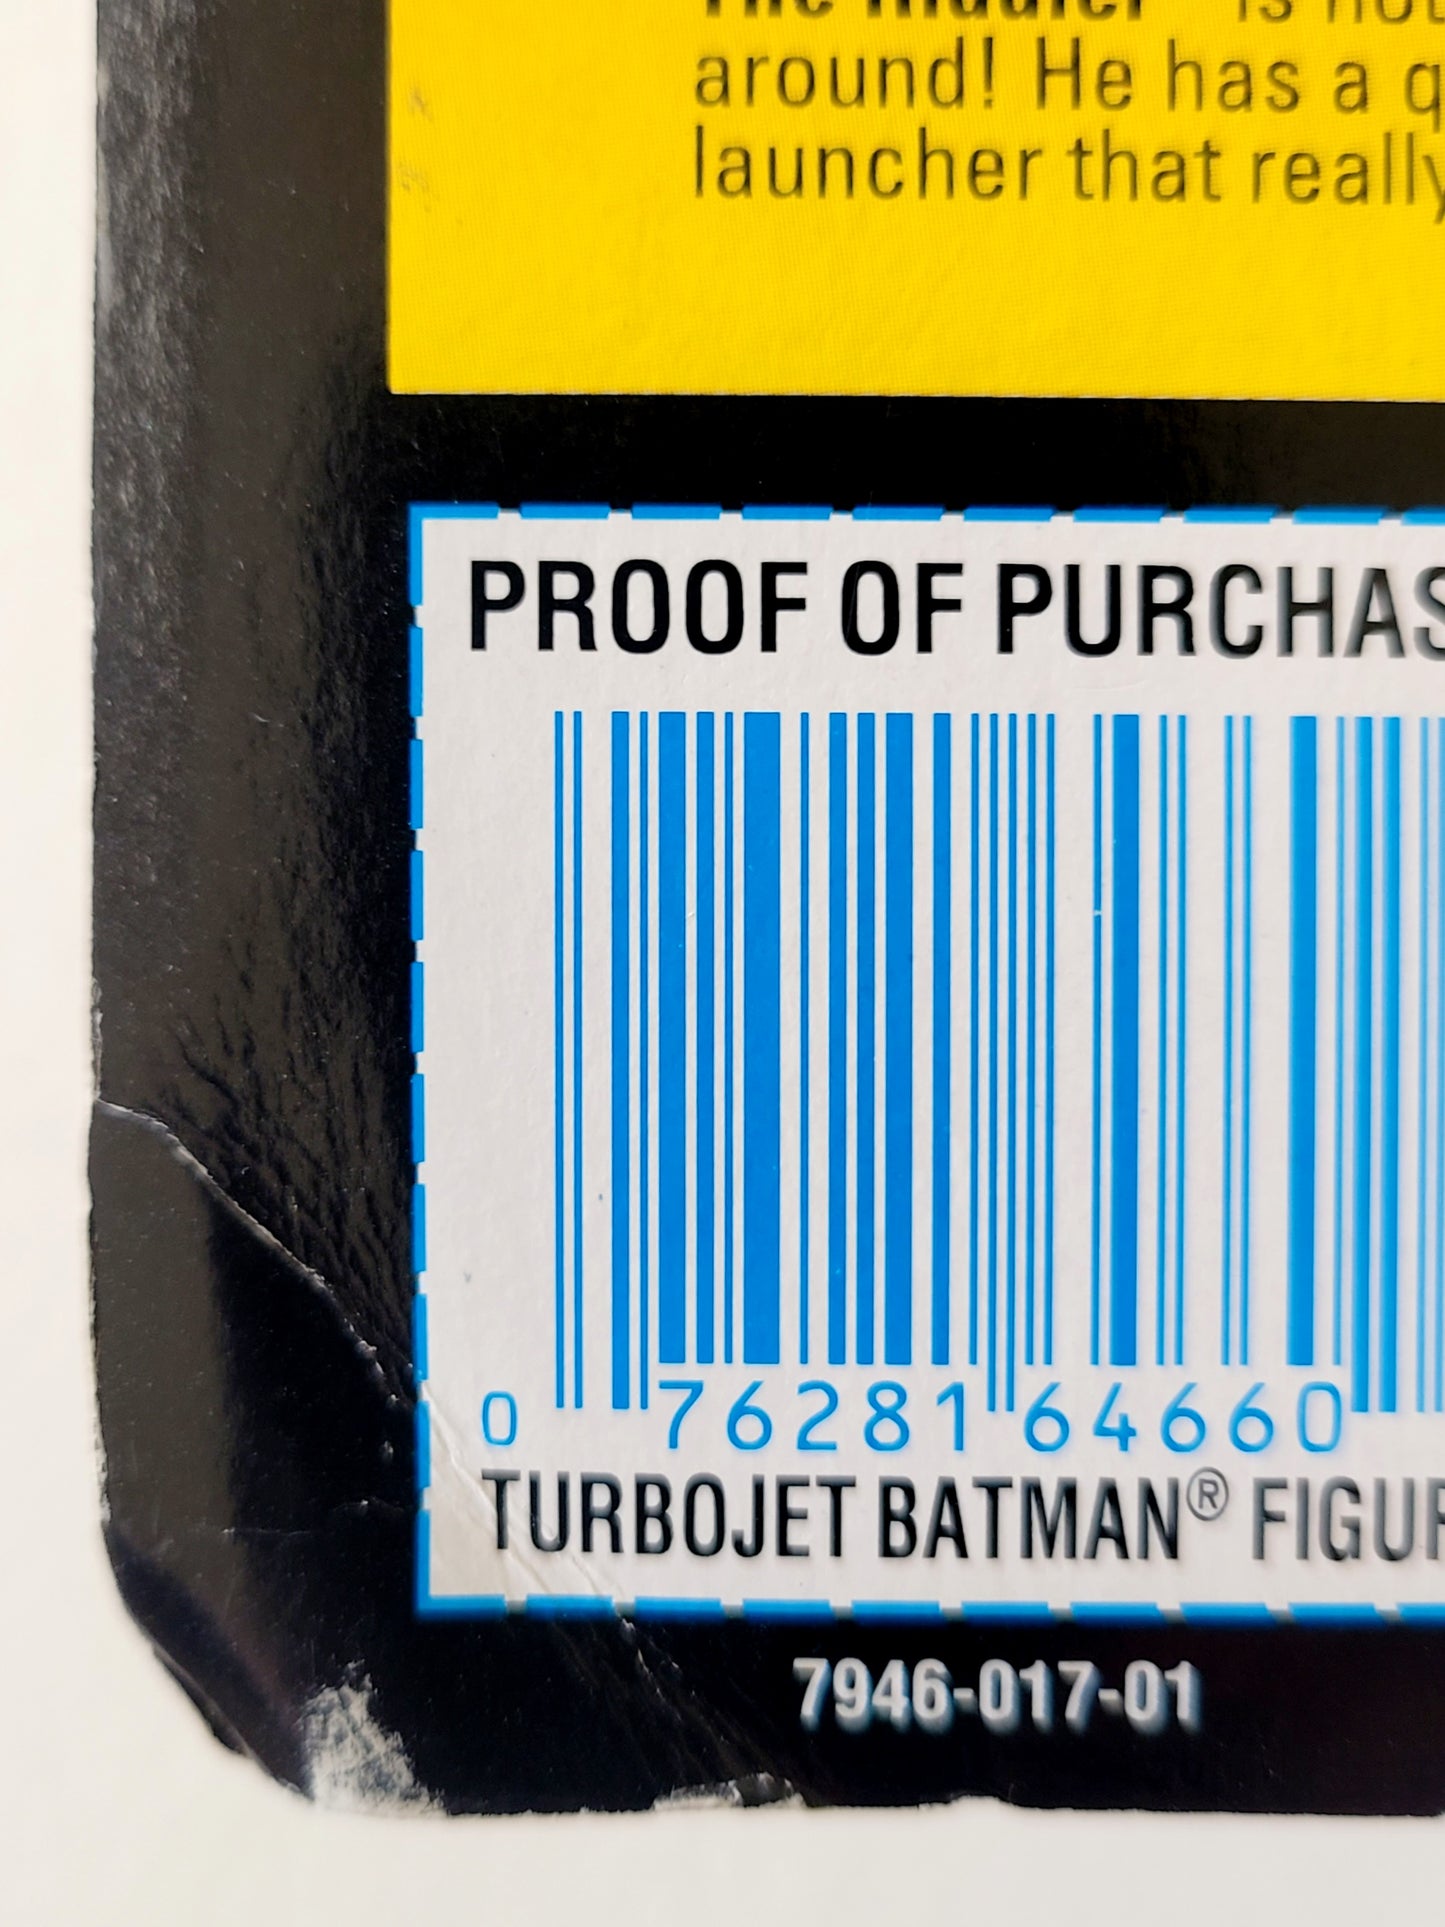 Turbojet Batman Action Figure from Batman: The Animated Series